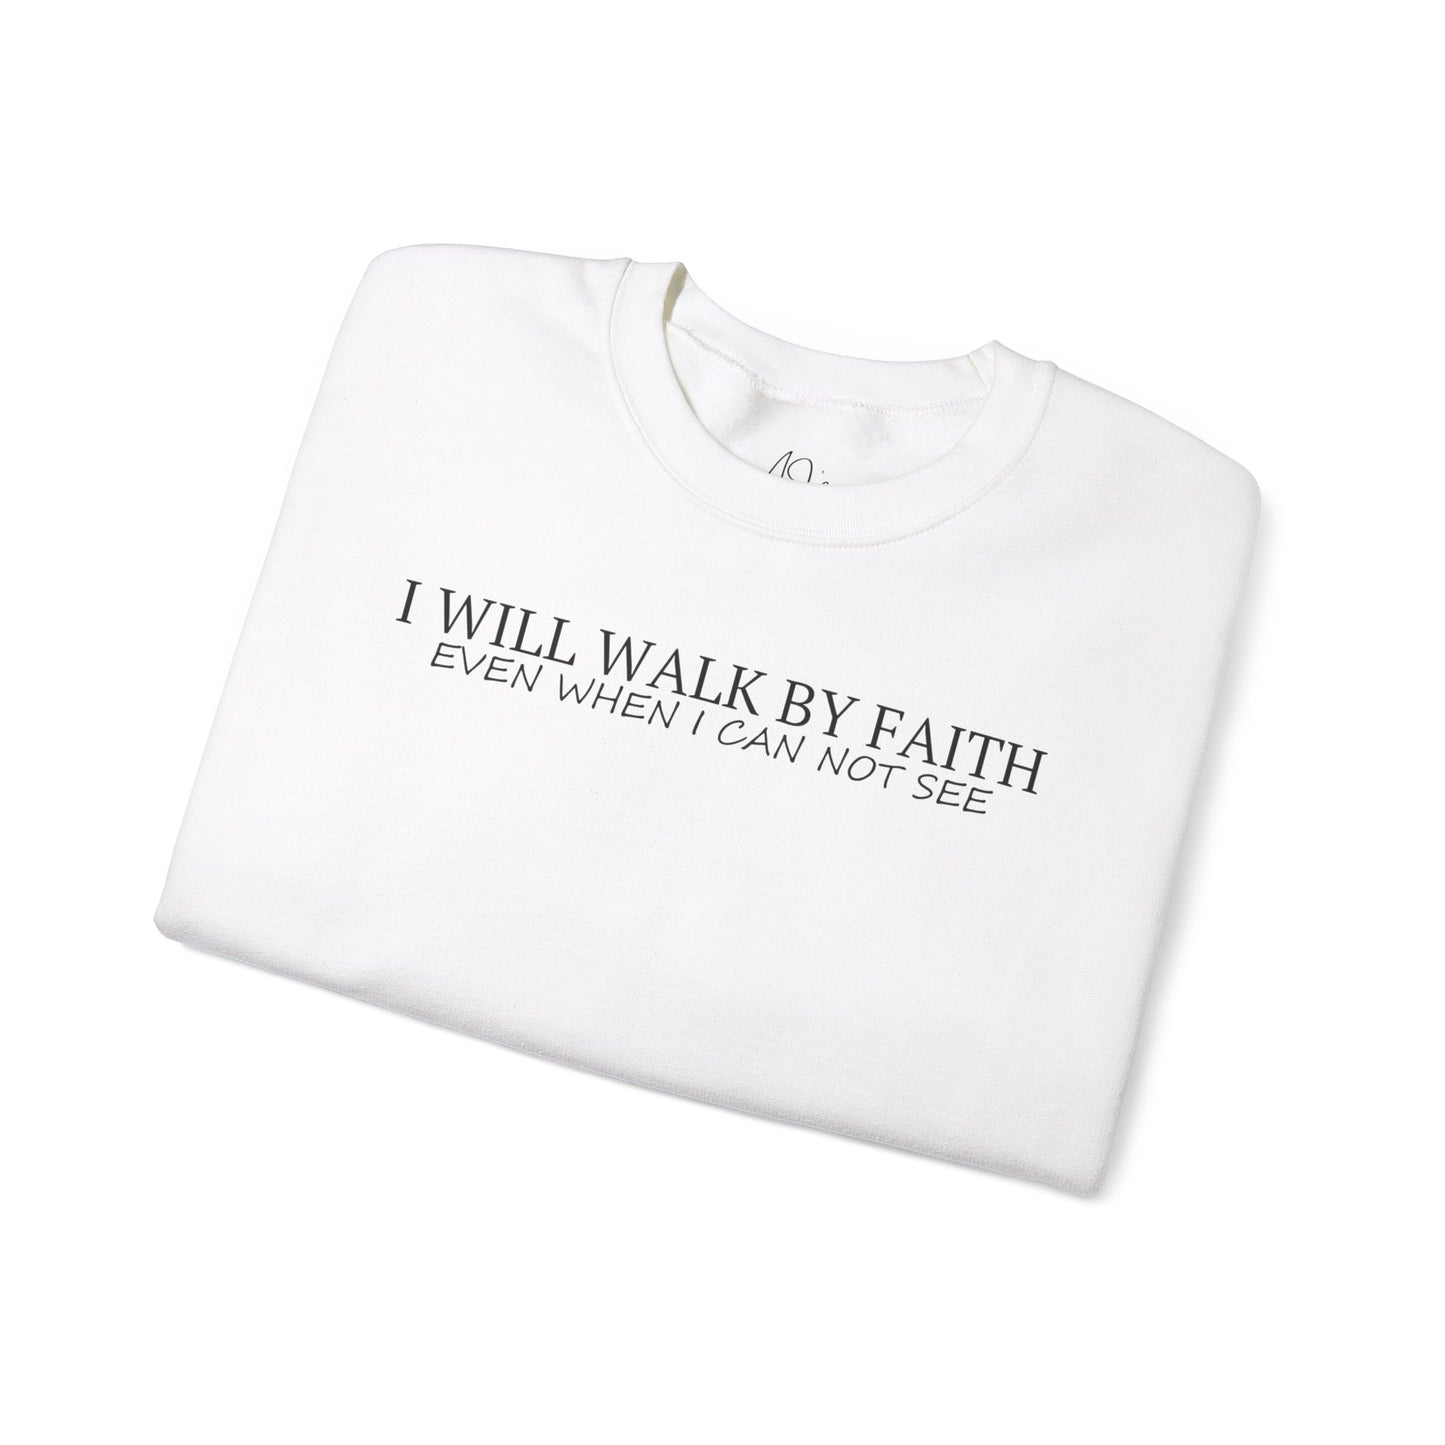 I Will Walk By Faith Sweatshirt, Christian Sweatshirts, Religious Sweatshirt, Inspirational Christian Sweatshirt, Motivational Crewneck